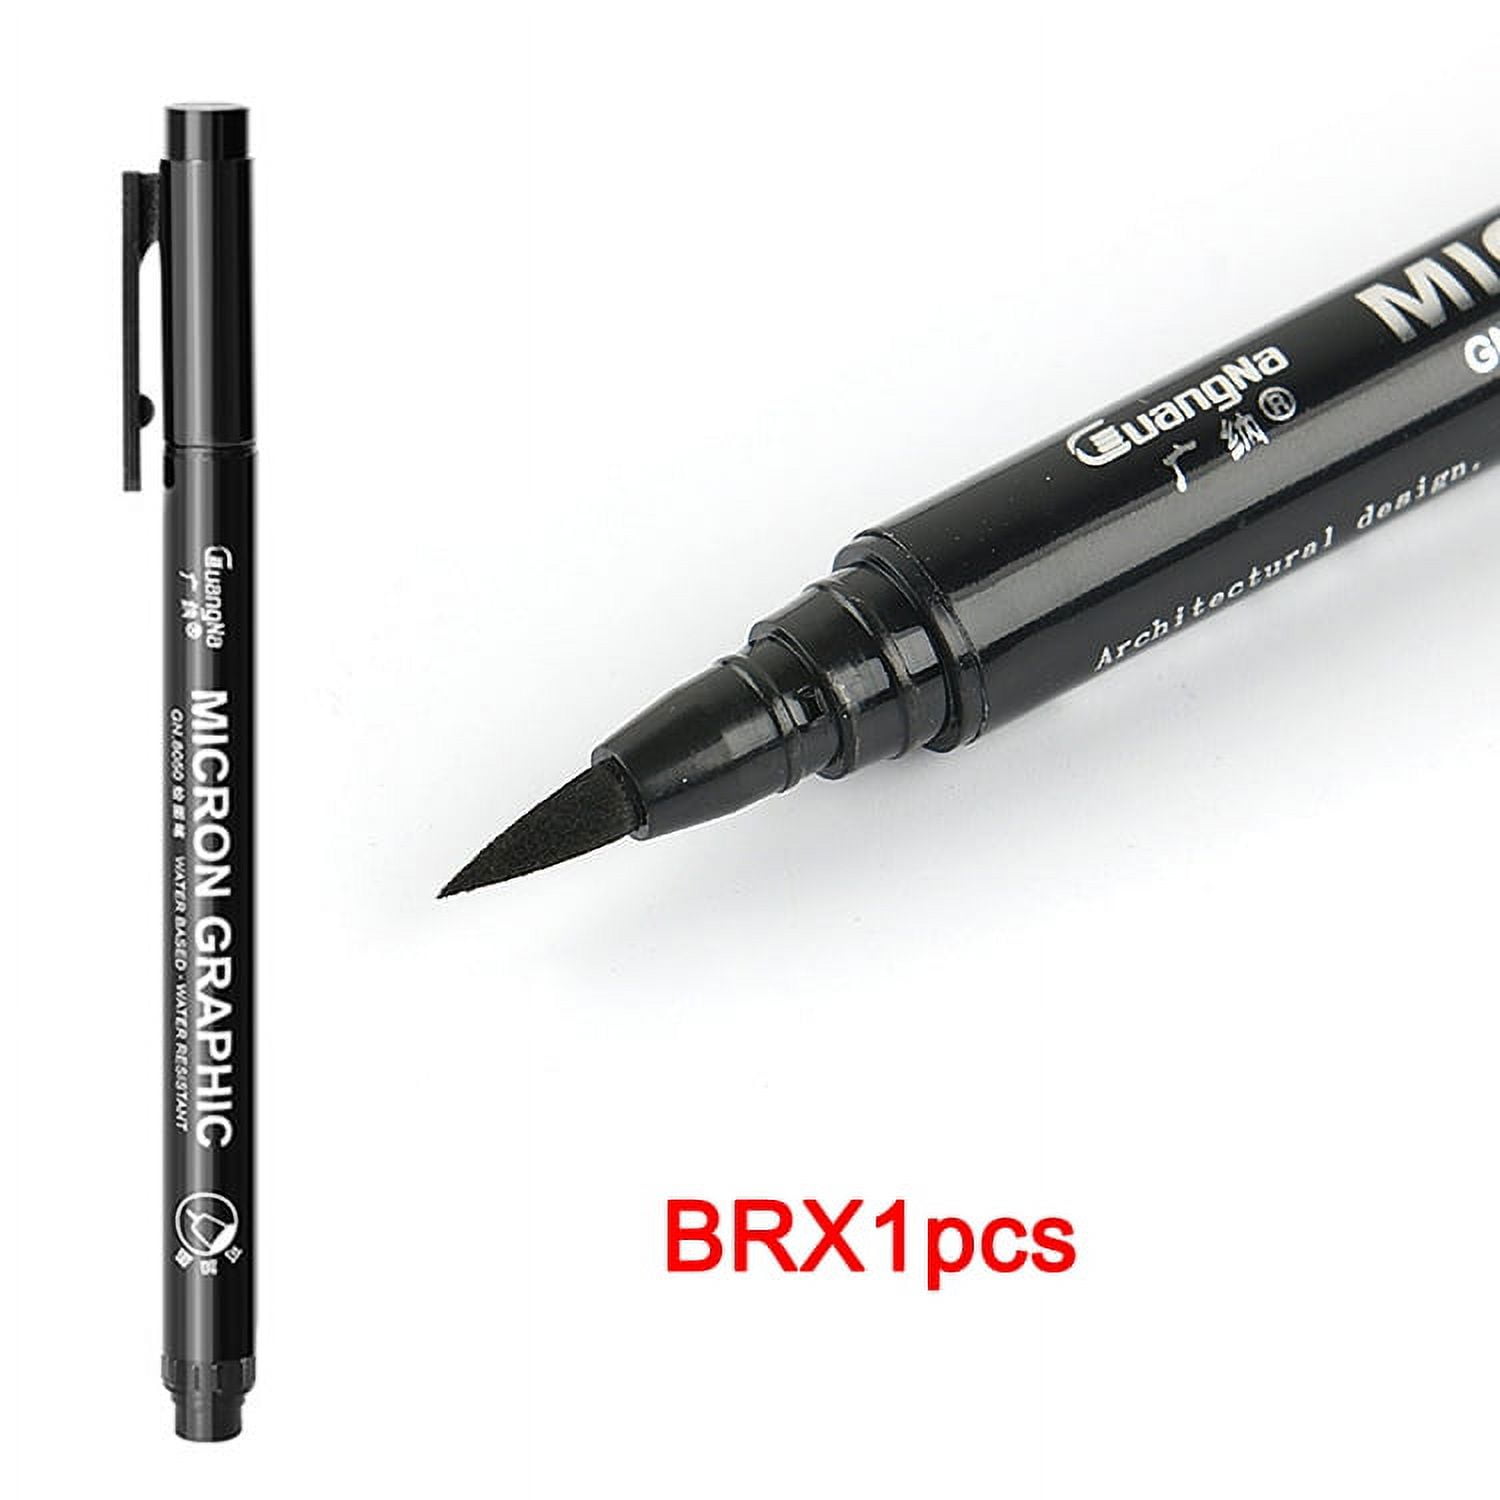 Drawing Pens Mogyann Black Art Pens for Drawing 12 Size Waterproof Ink Pens  for Artists Sketching, Manga, Writing 